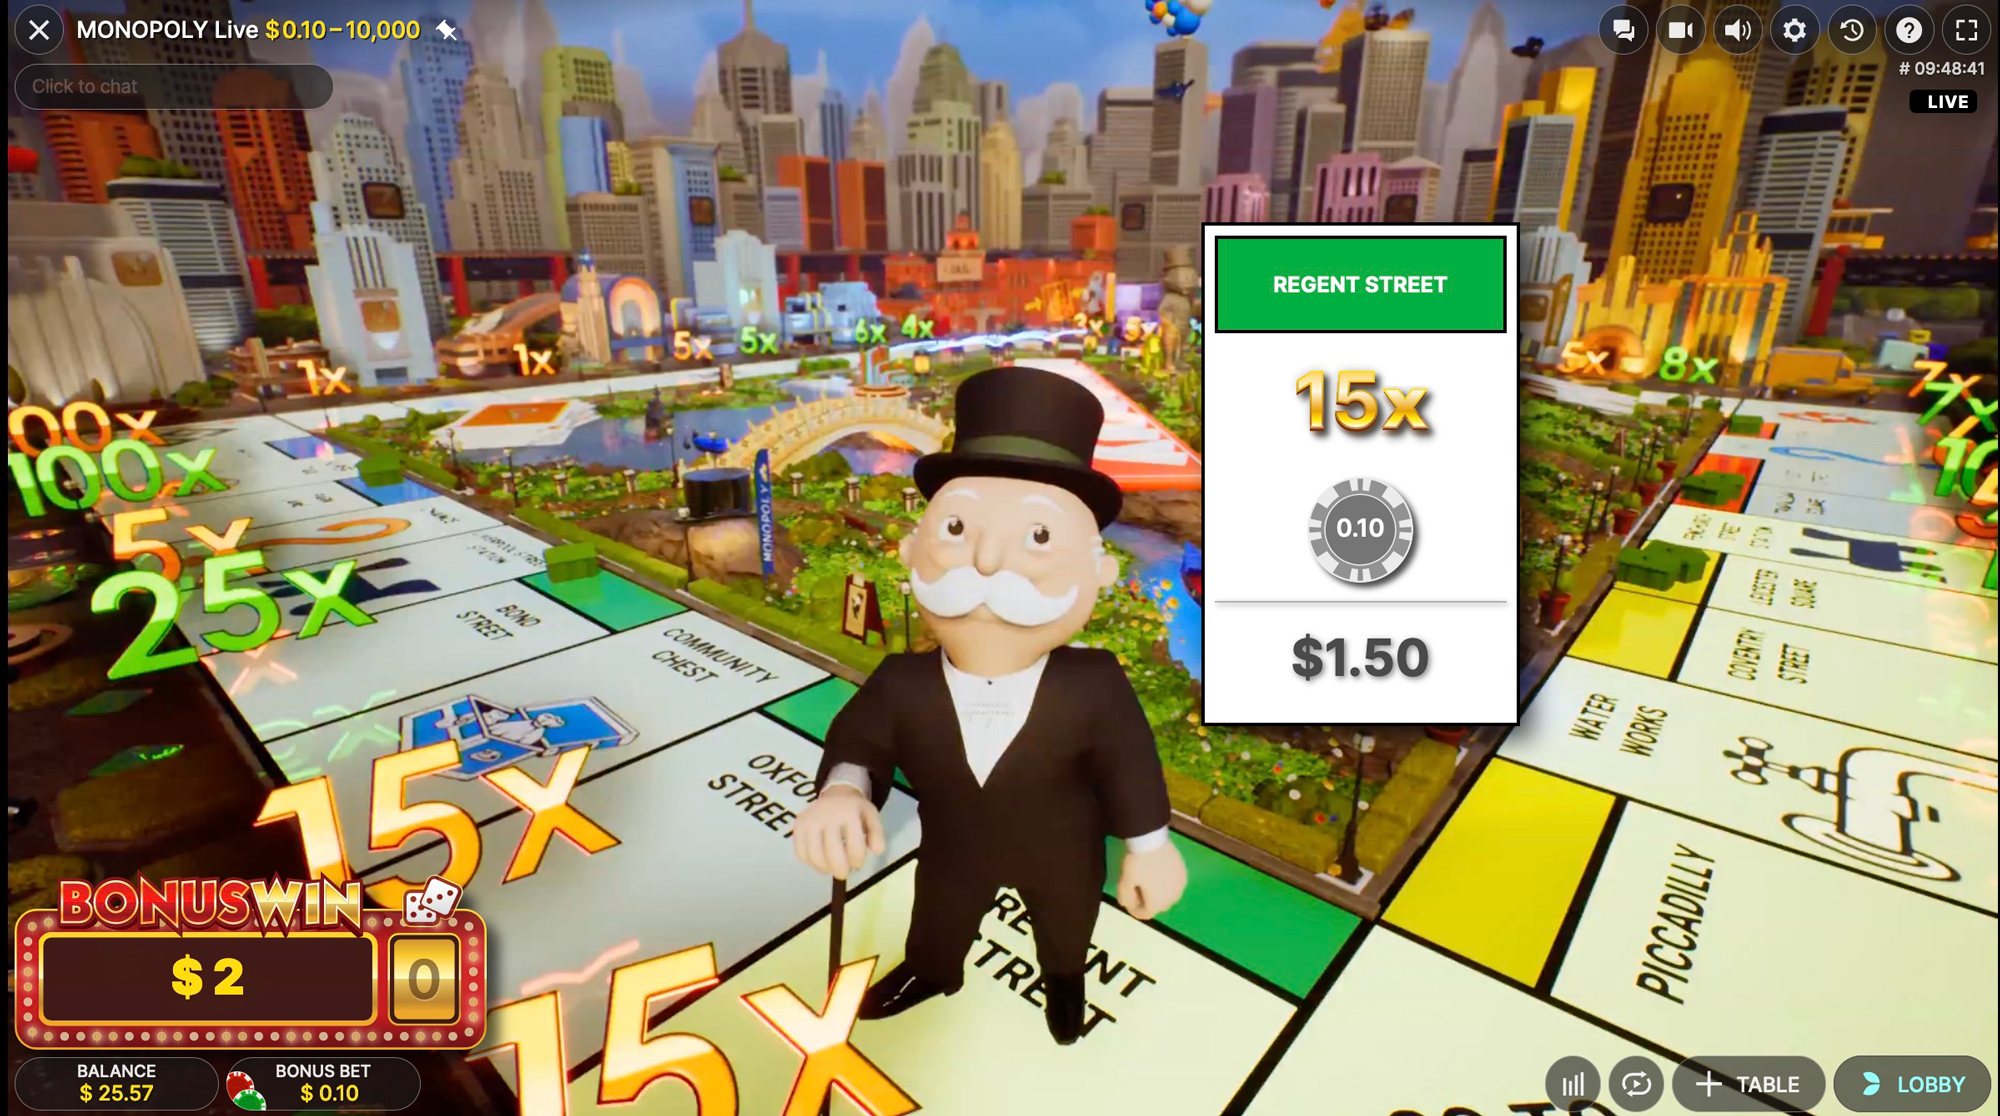 Interface do jogo Monopoly Live